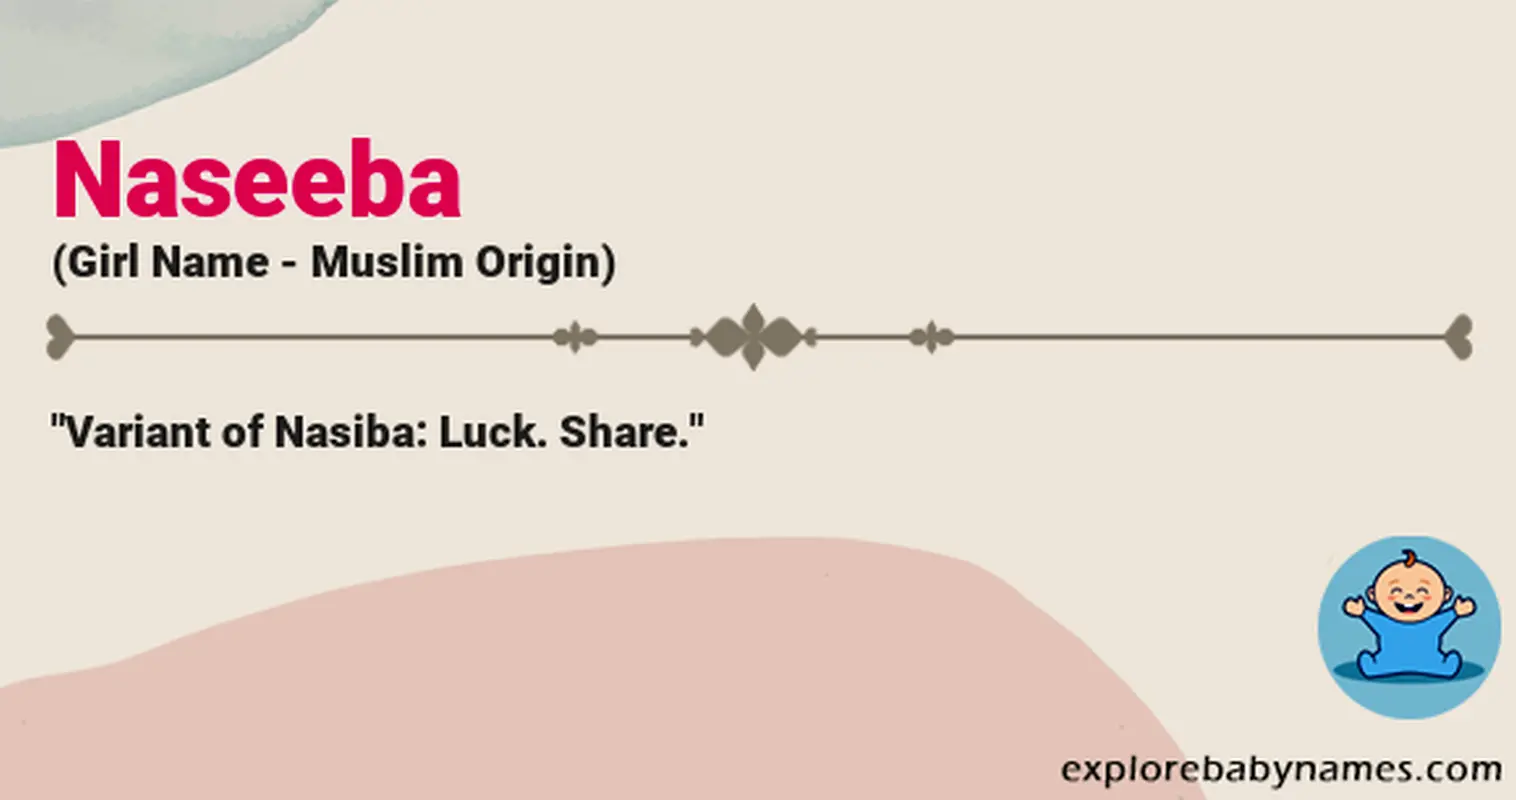 Meaning of Naseeba